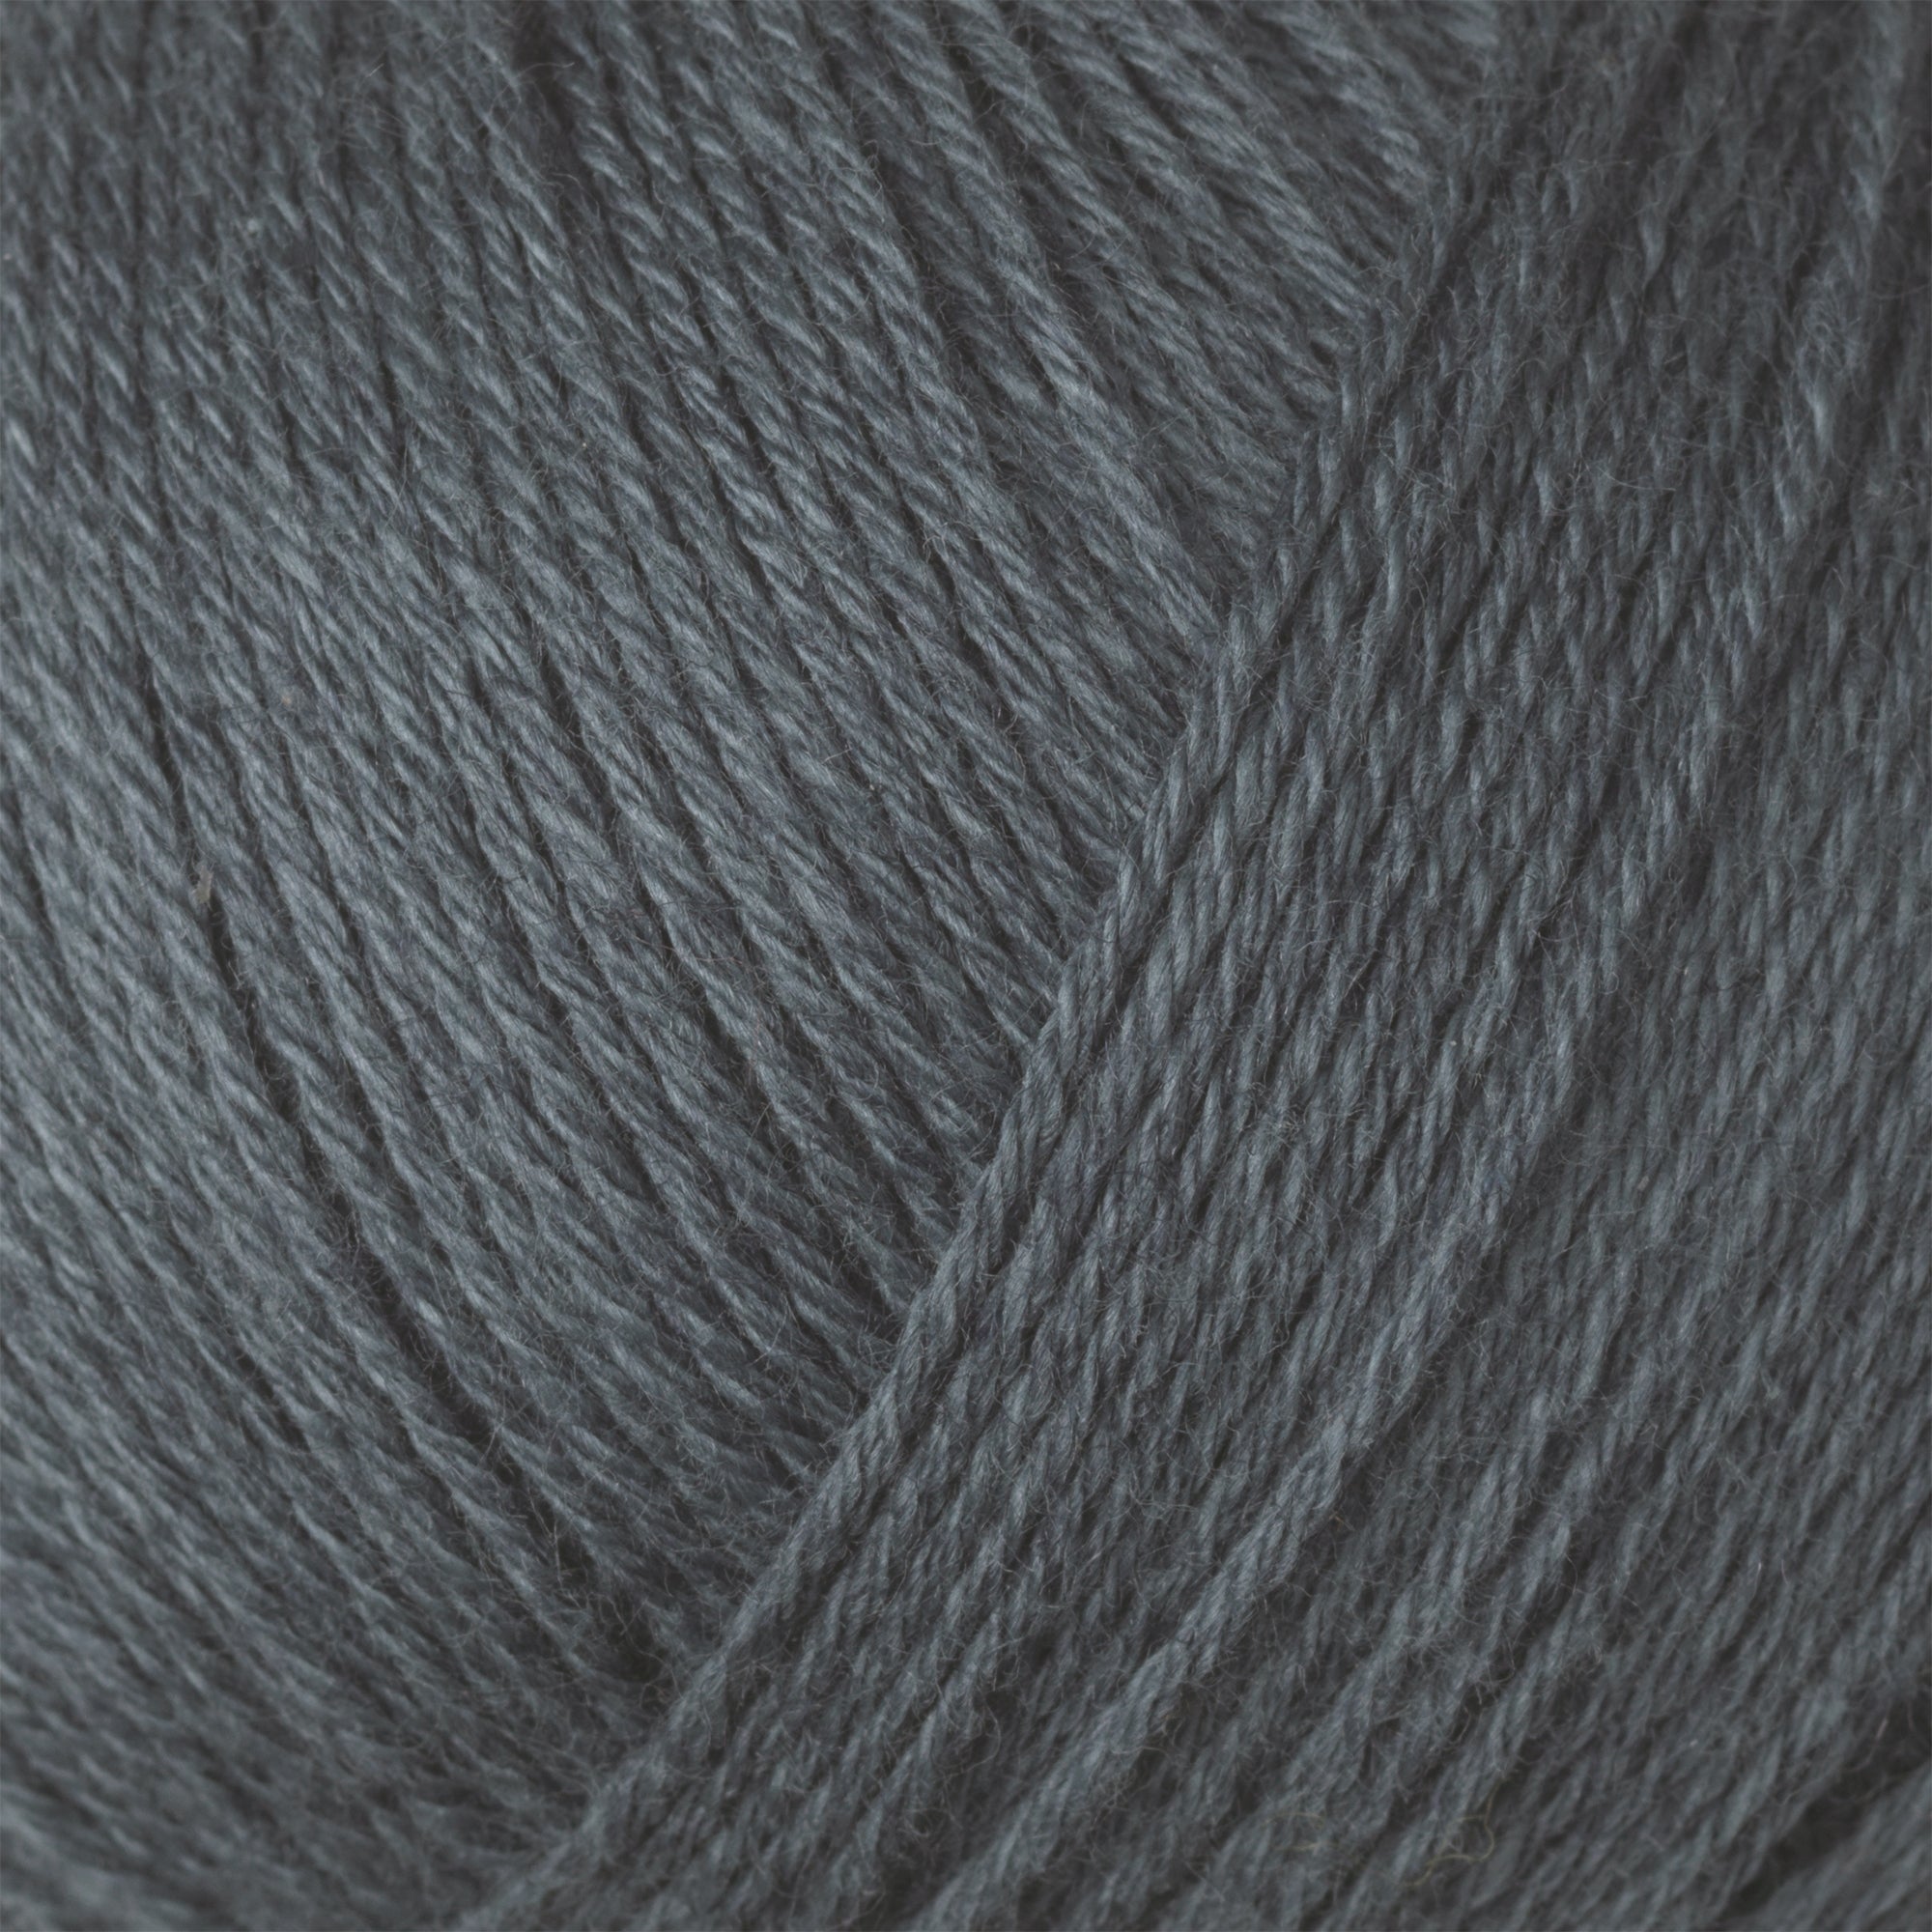 Knitting for Olive Cotton Merino - Staubiger Blauwal